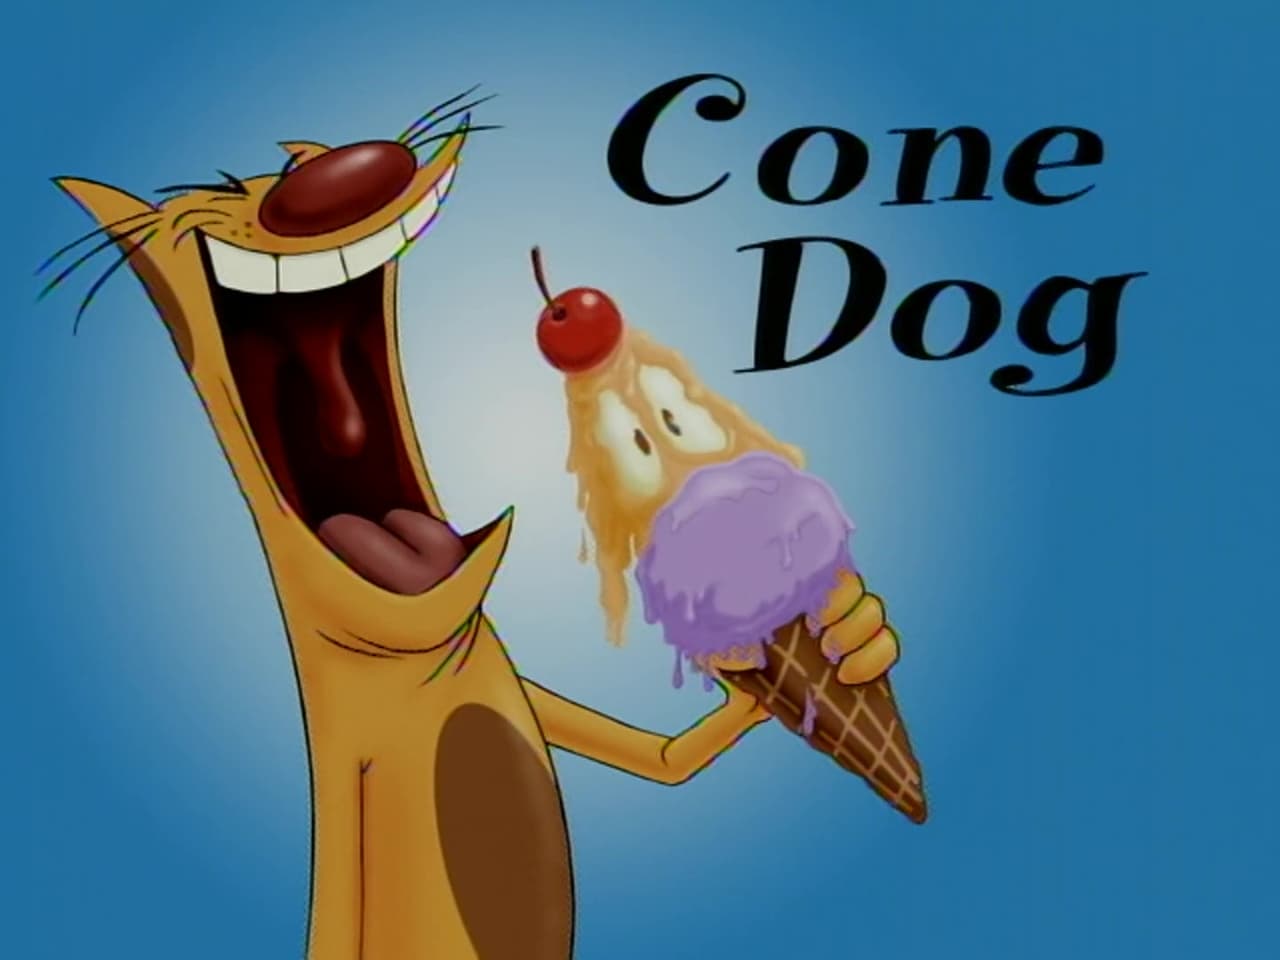 Cone Dog